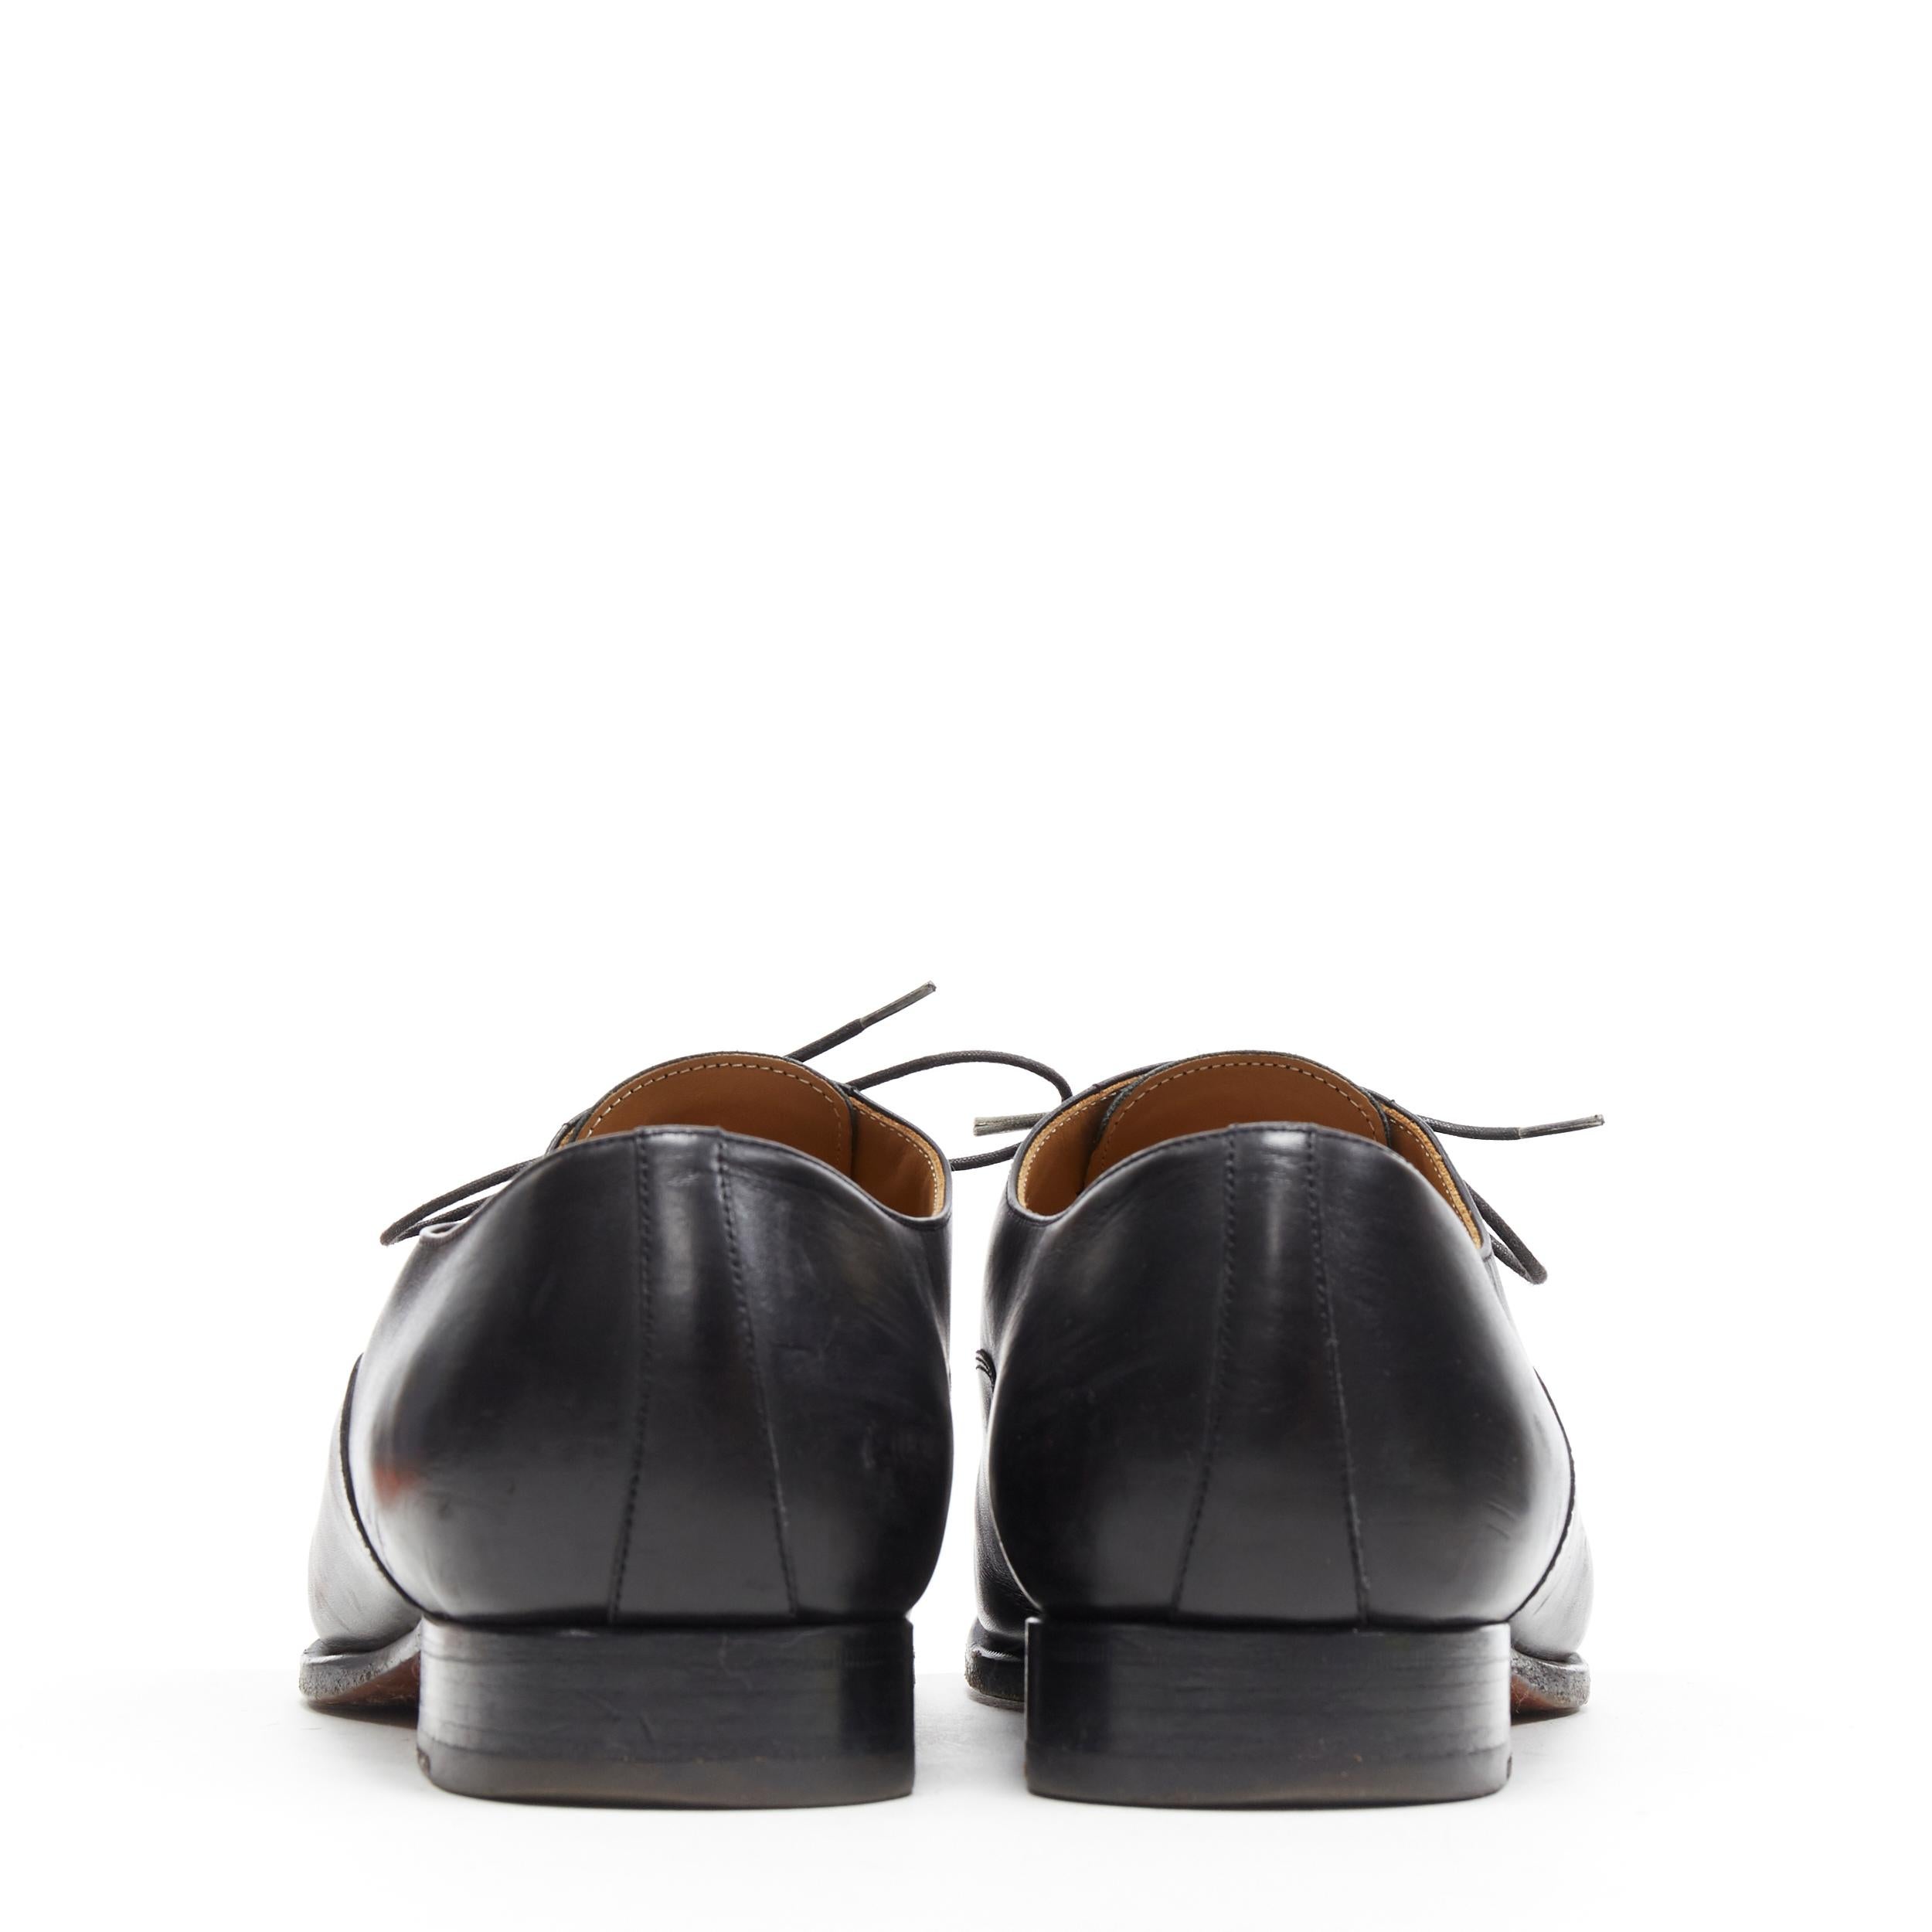 Men's HERMES black calf leather 5-eyelet lace up derby oxford dress shoes EU43.5